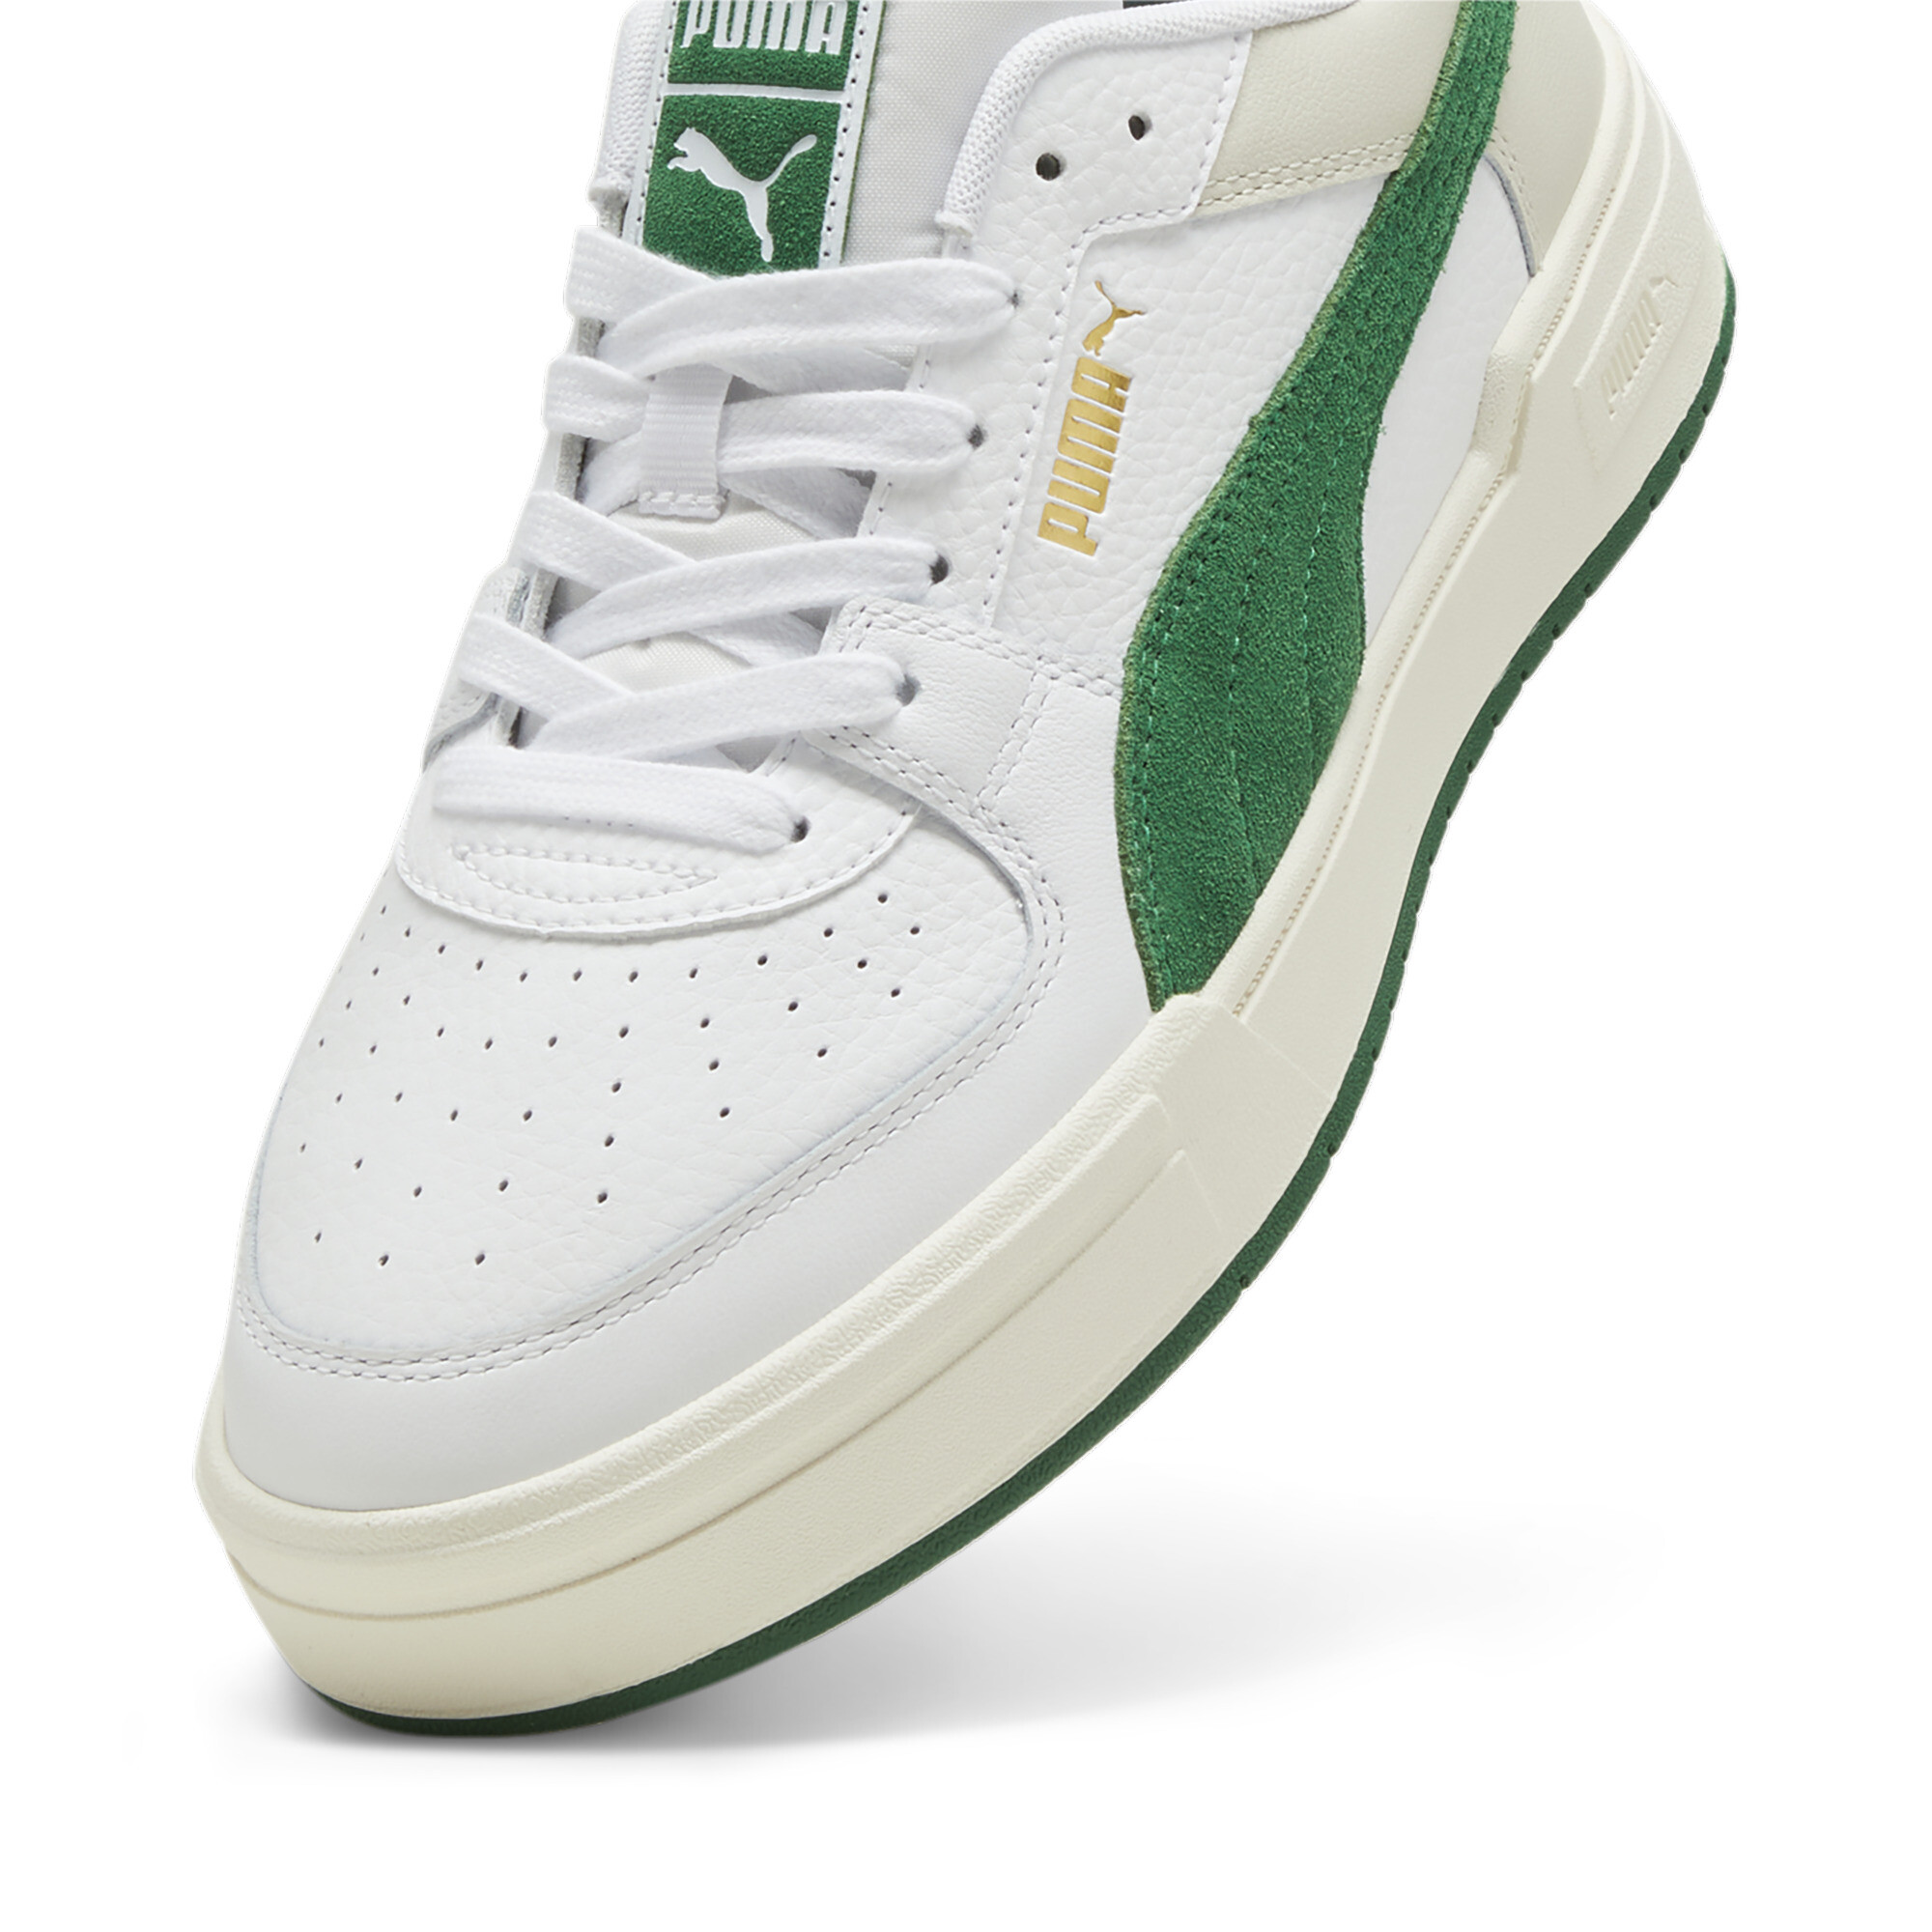 Men's PUMA CA Pro Suede FS Sneakers In White, Size EU 44